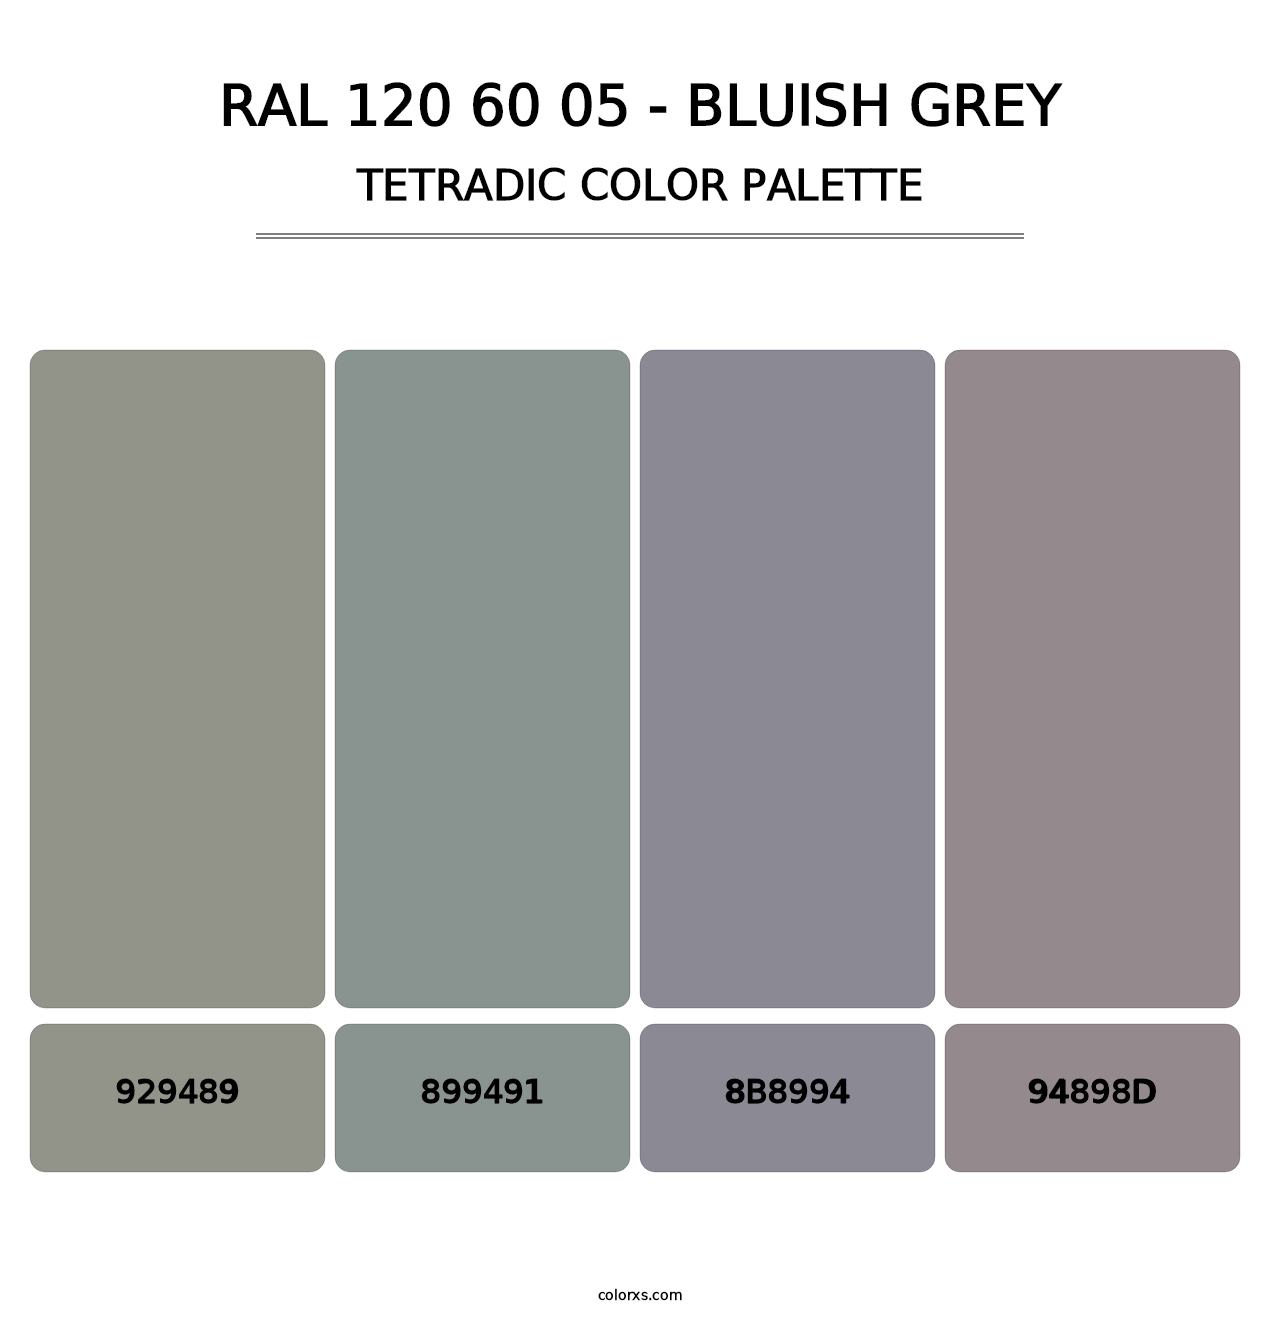 RAL 120 60 05 - Bluish Grey - Tetradic Color Palette